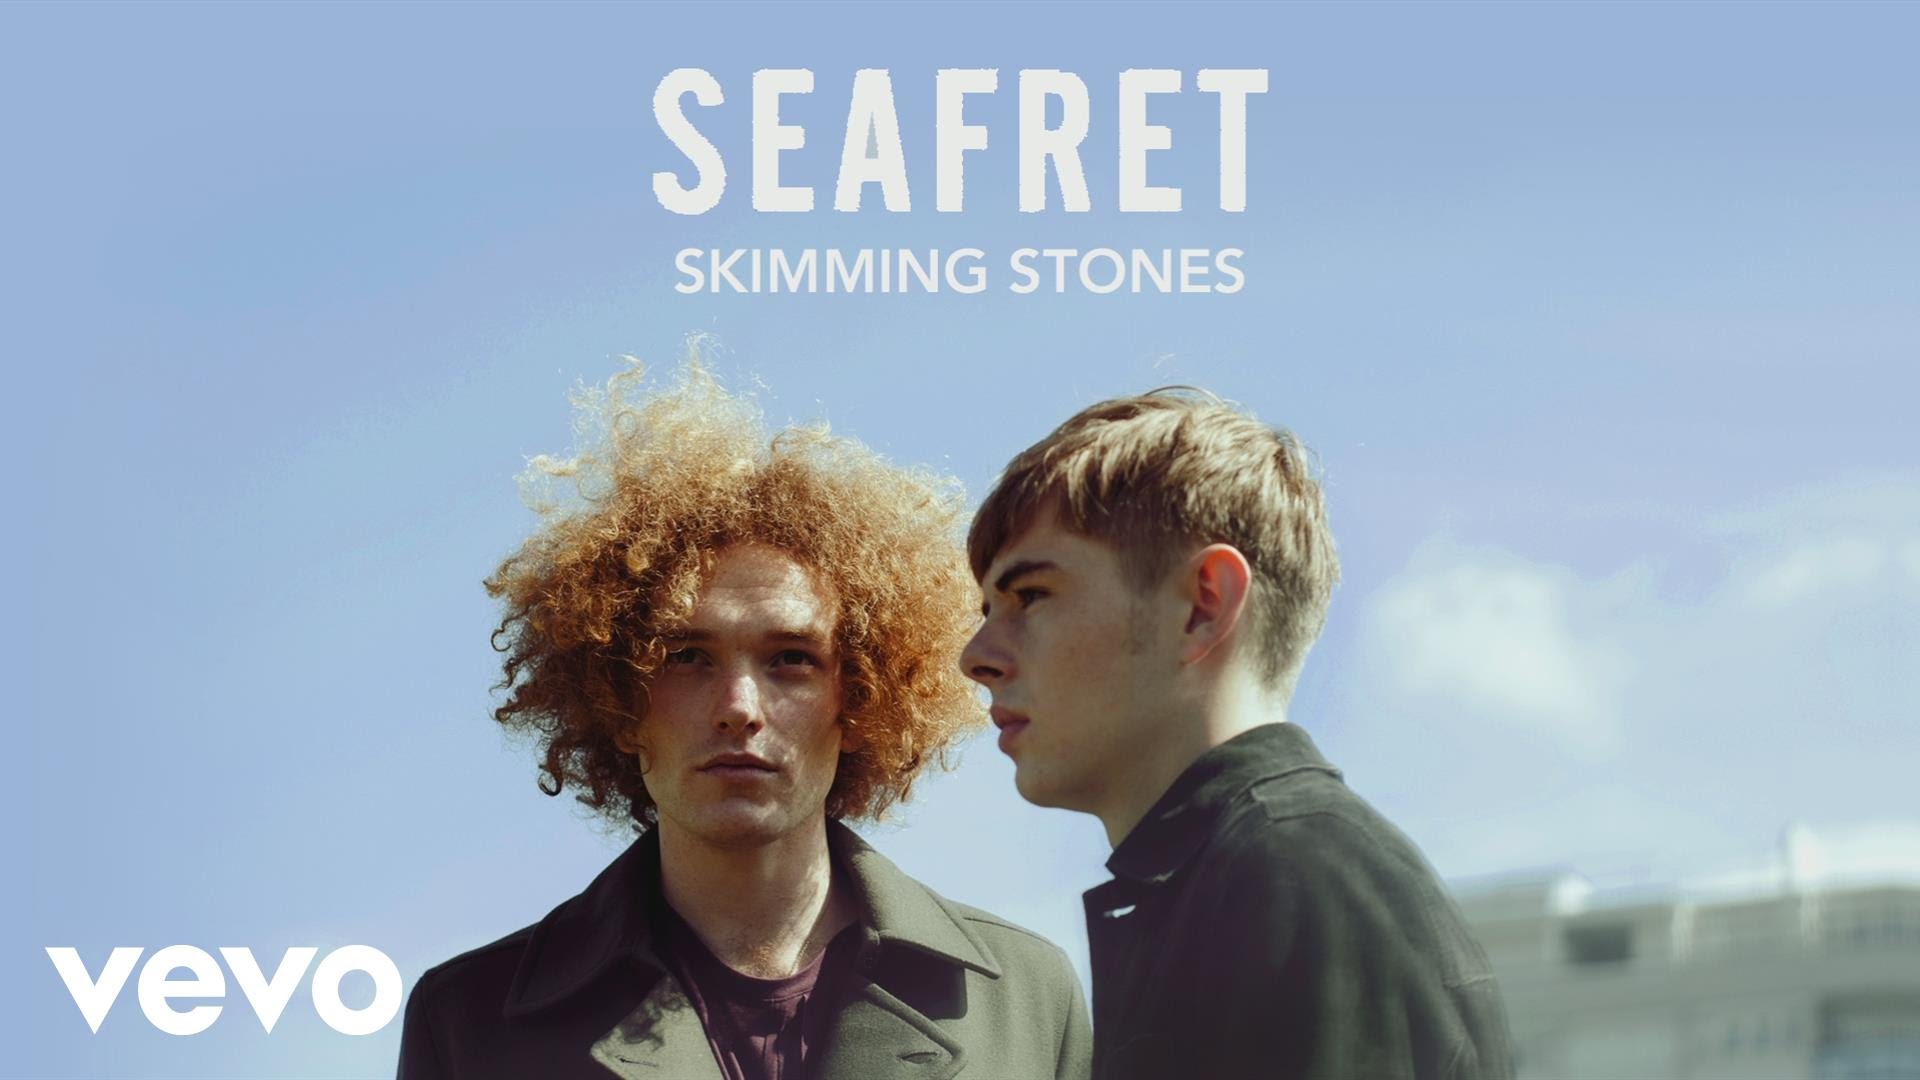 Seafret - Skimming Stones (Audio) - YouTube